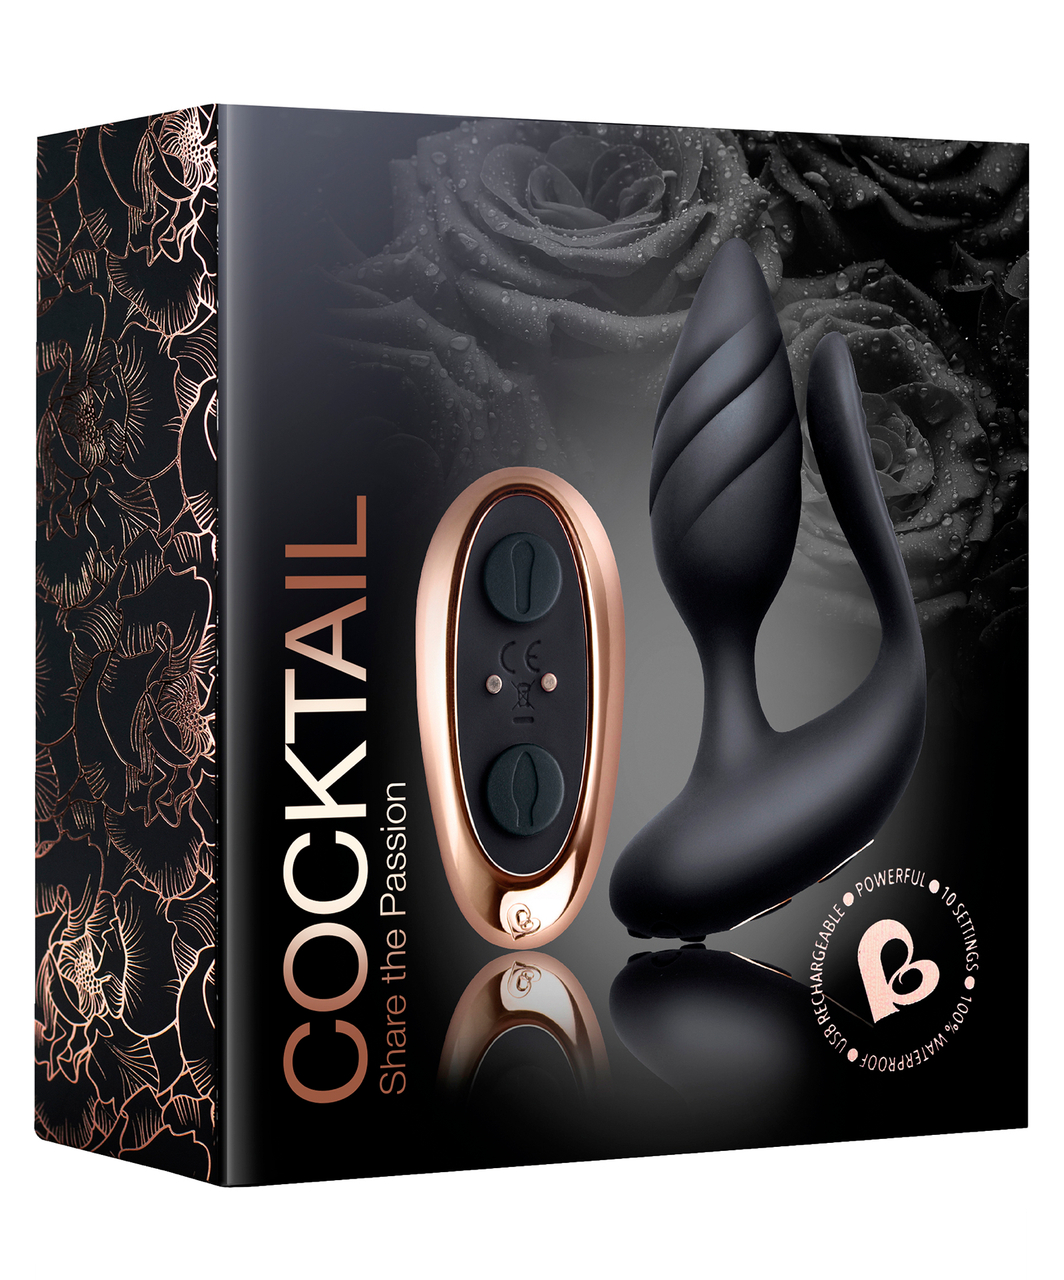 Rocks-Off Cocktail Anus & Vagina Dual вибратор для пар